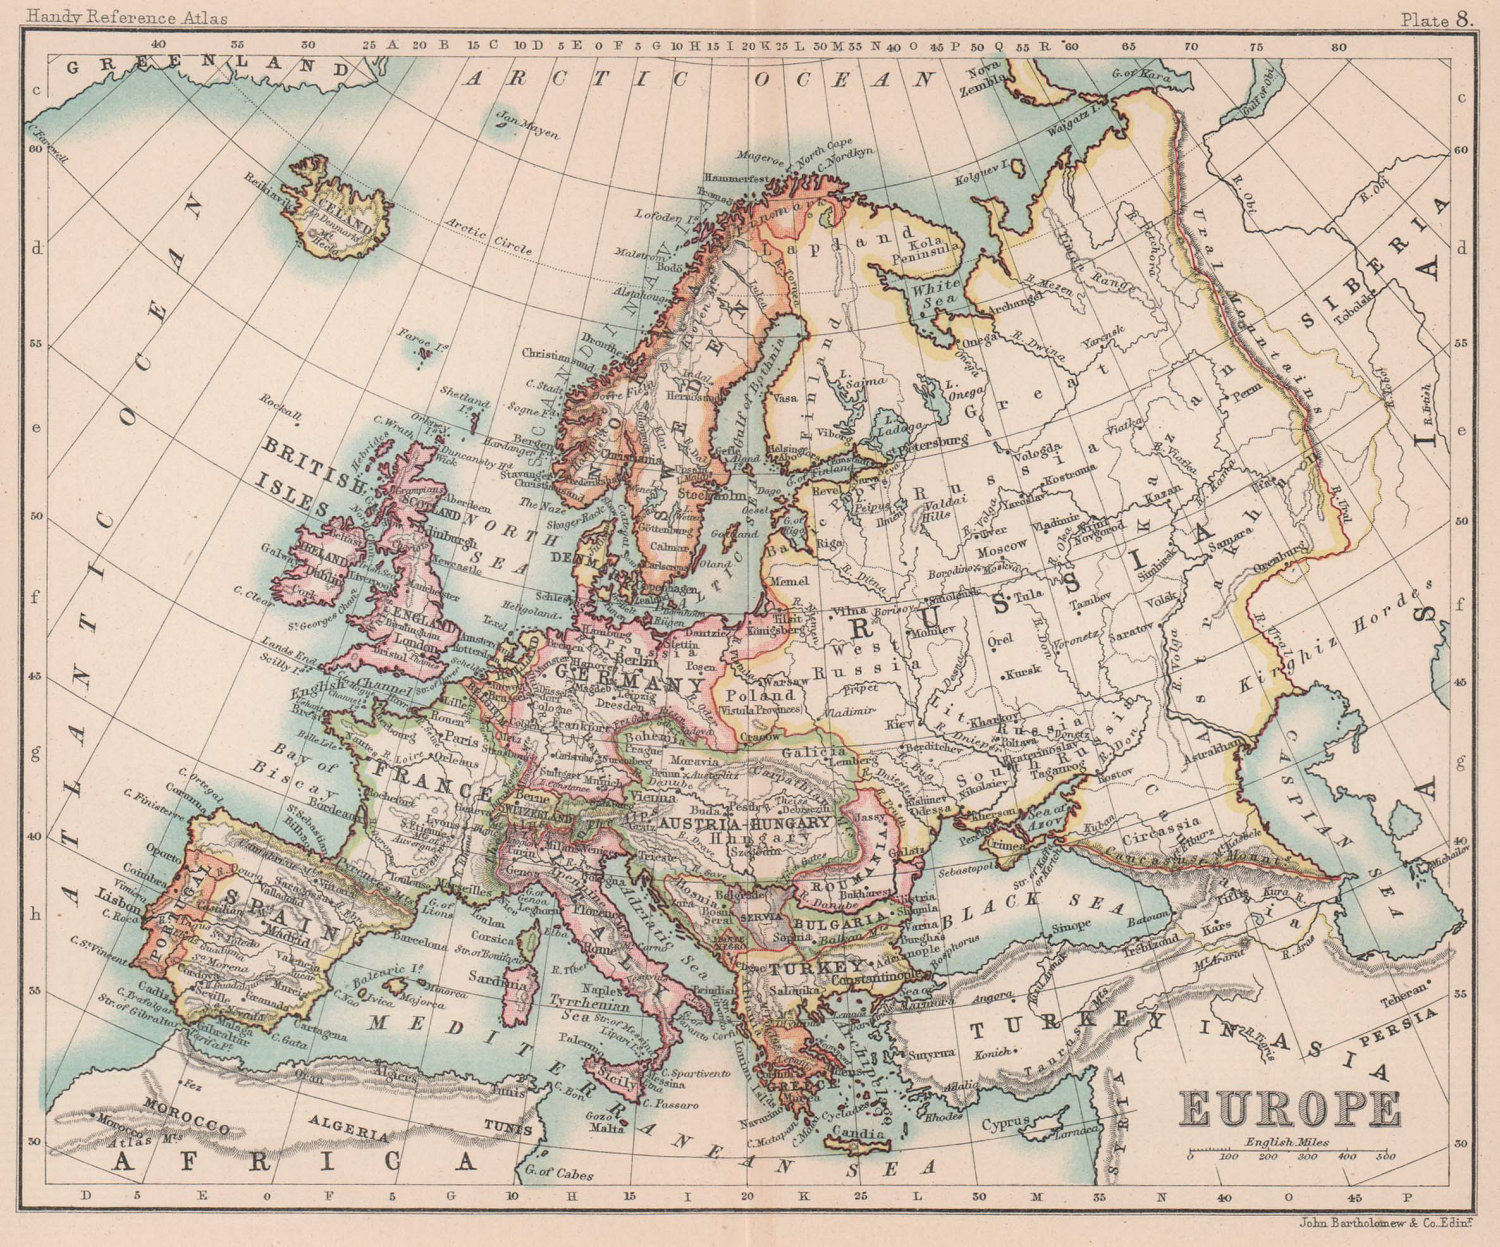 Associate Product Europe political. Austria-Hungary. Turkey in Europe. BARTHOLOMEW 1888 old map